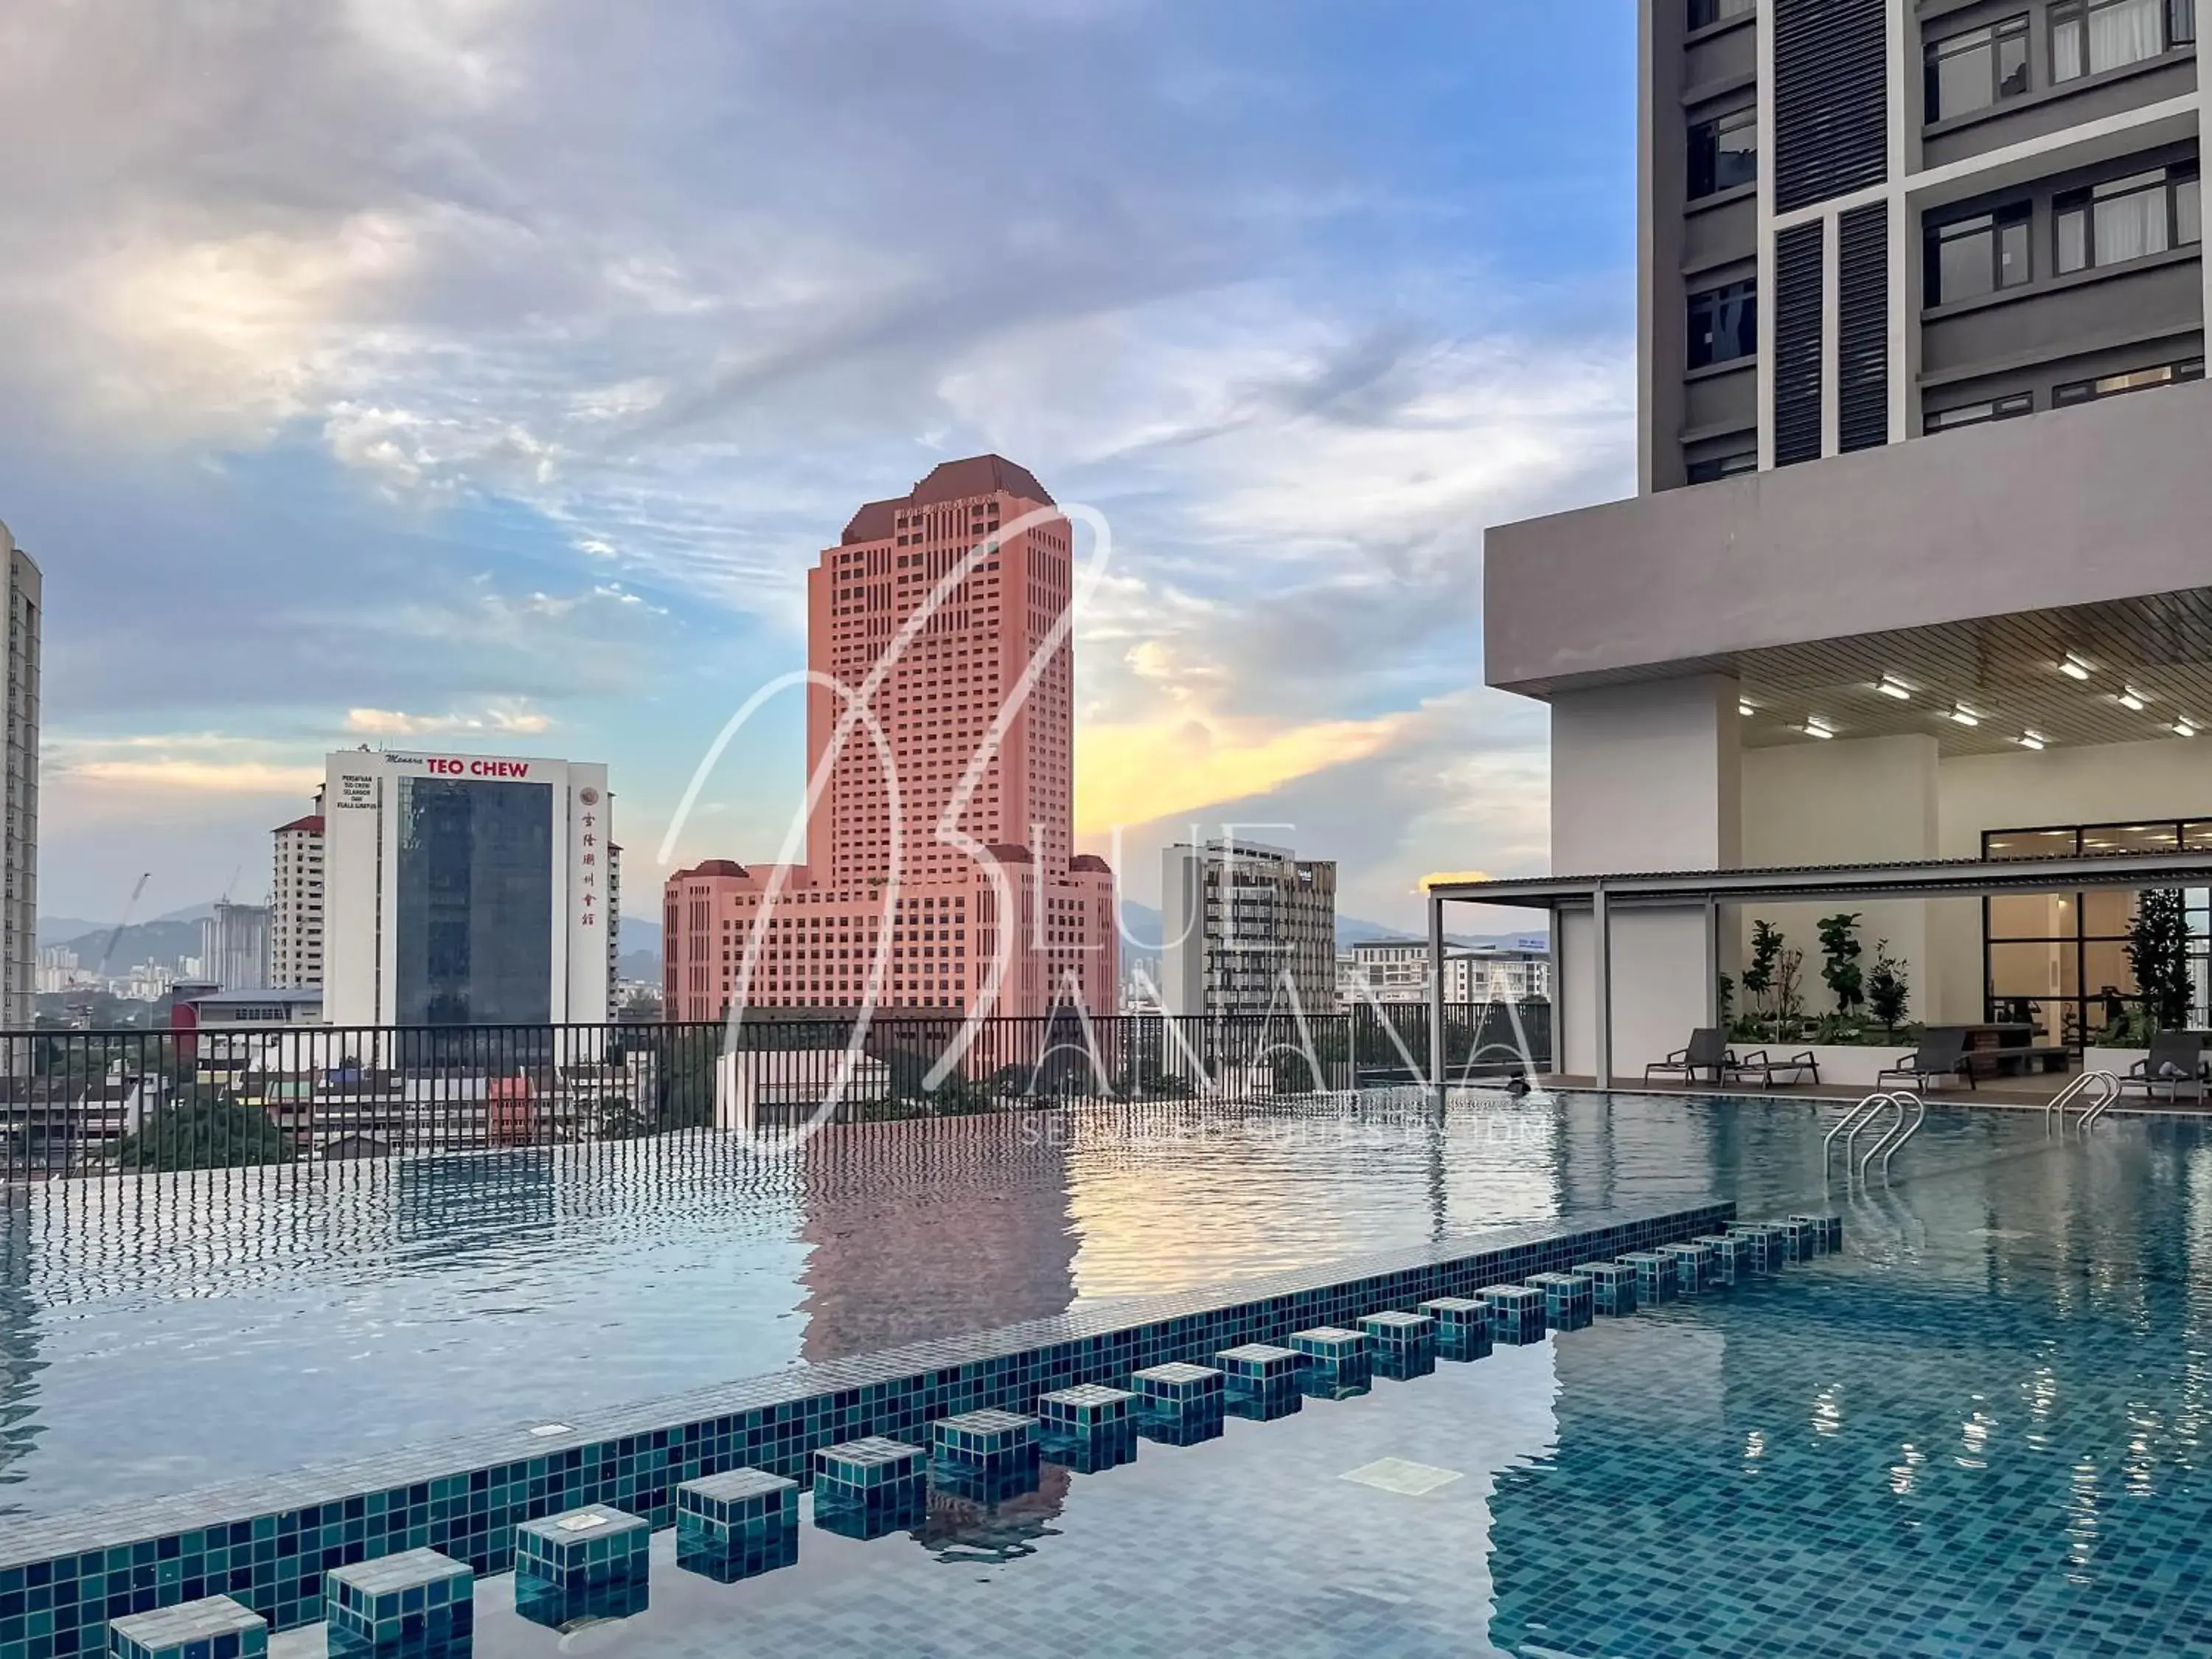 Swimming Pool in Chambers Residence Premier Suites, Chow Kit, Kuala Lumpur by BlueBanana